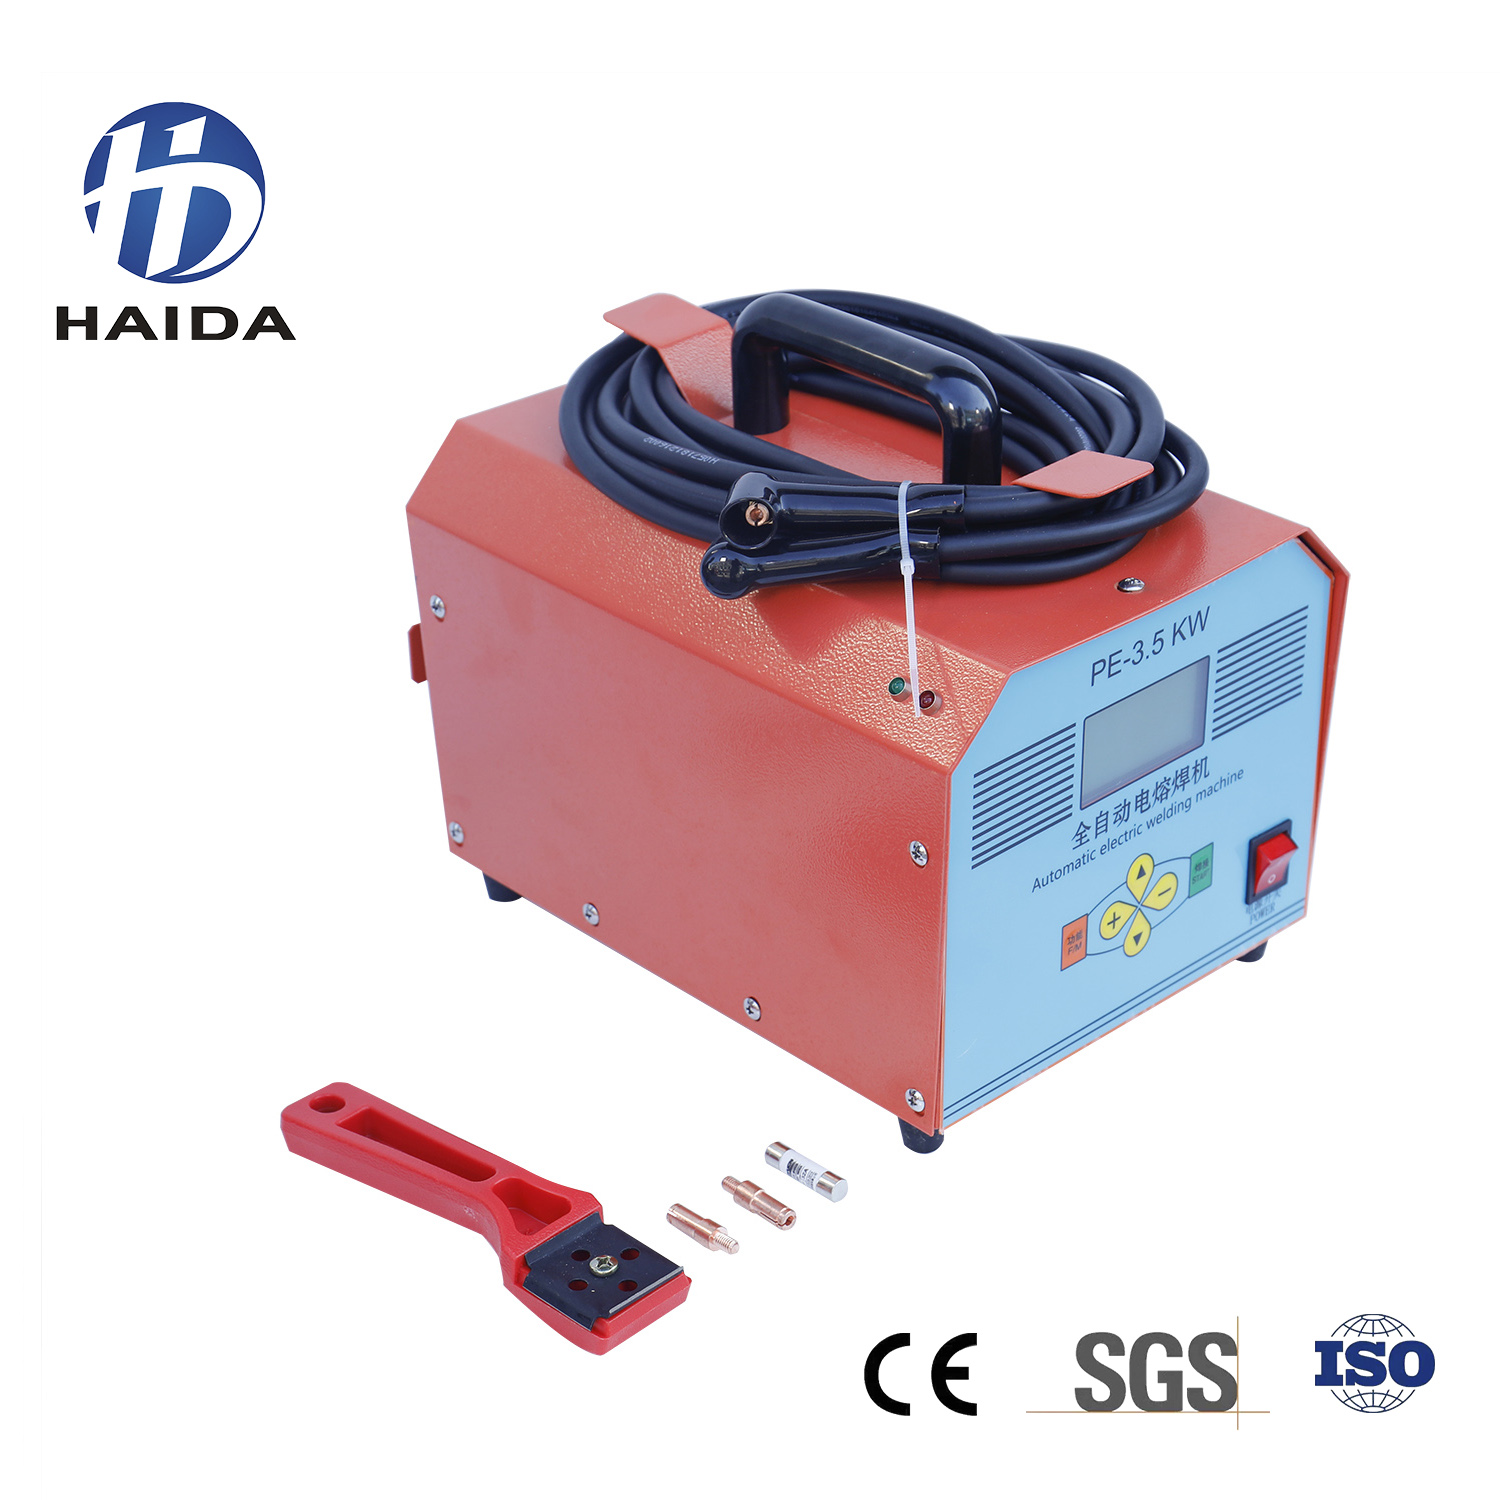 HD-DRHJ315 ELECTRICFUSION WELDING MACHINE